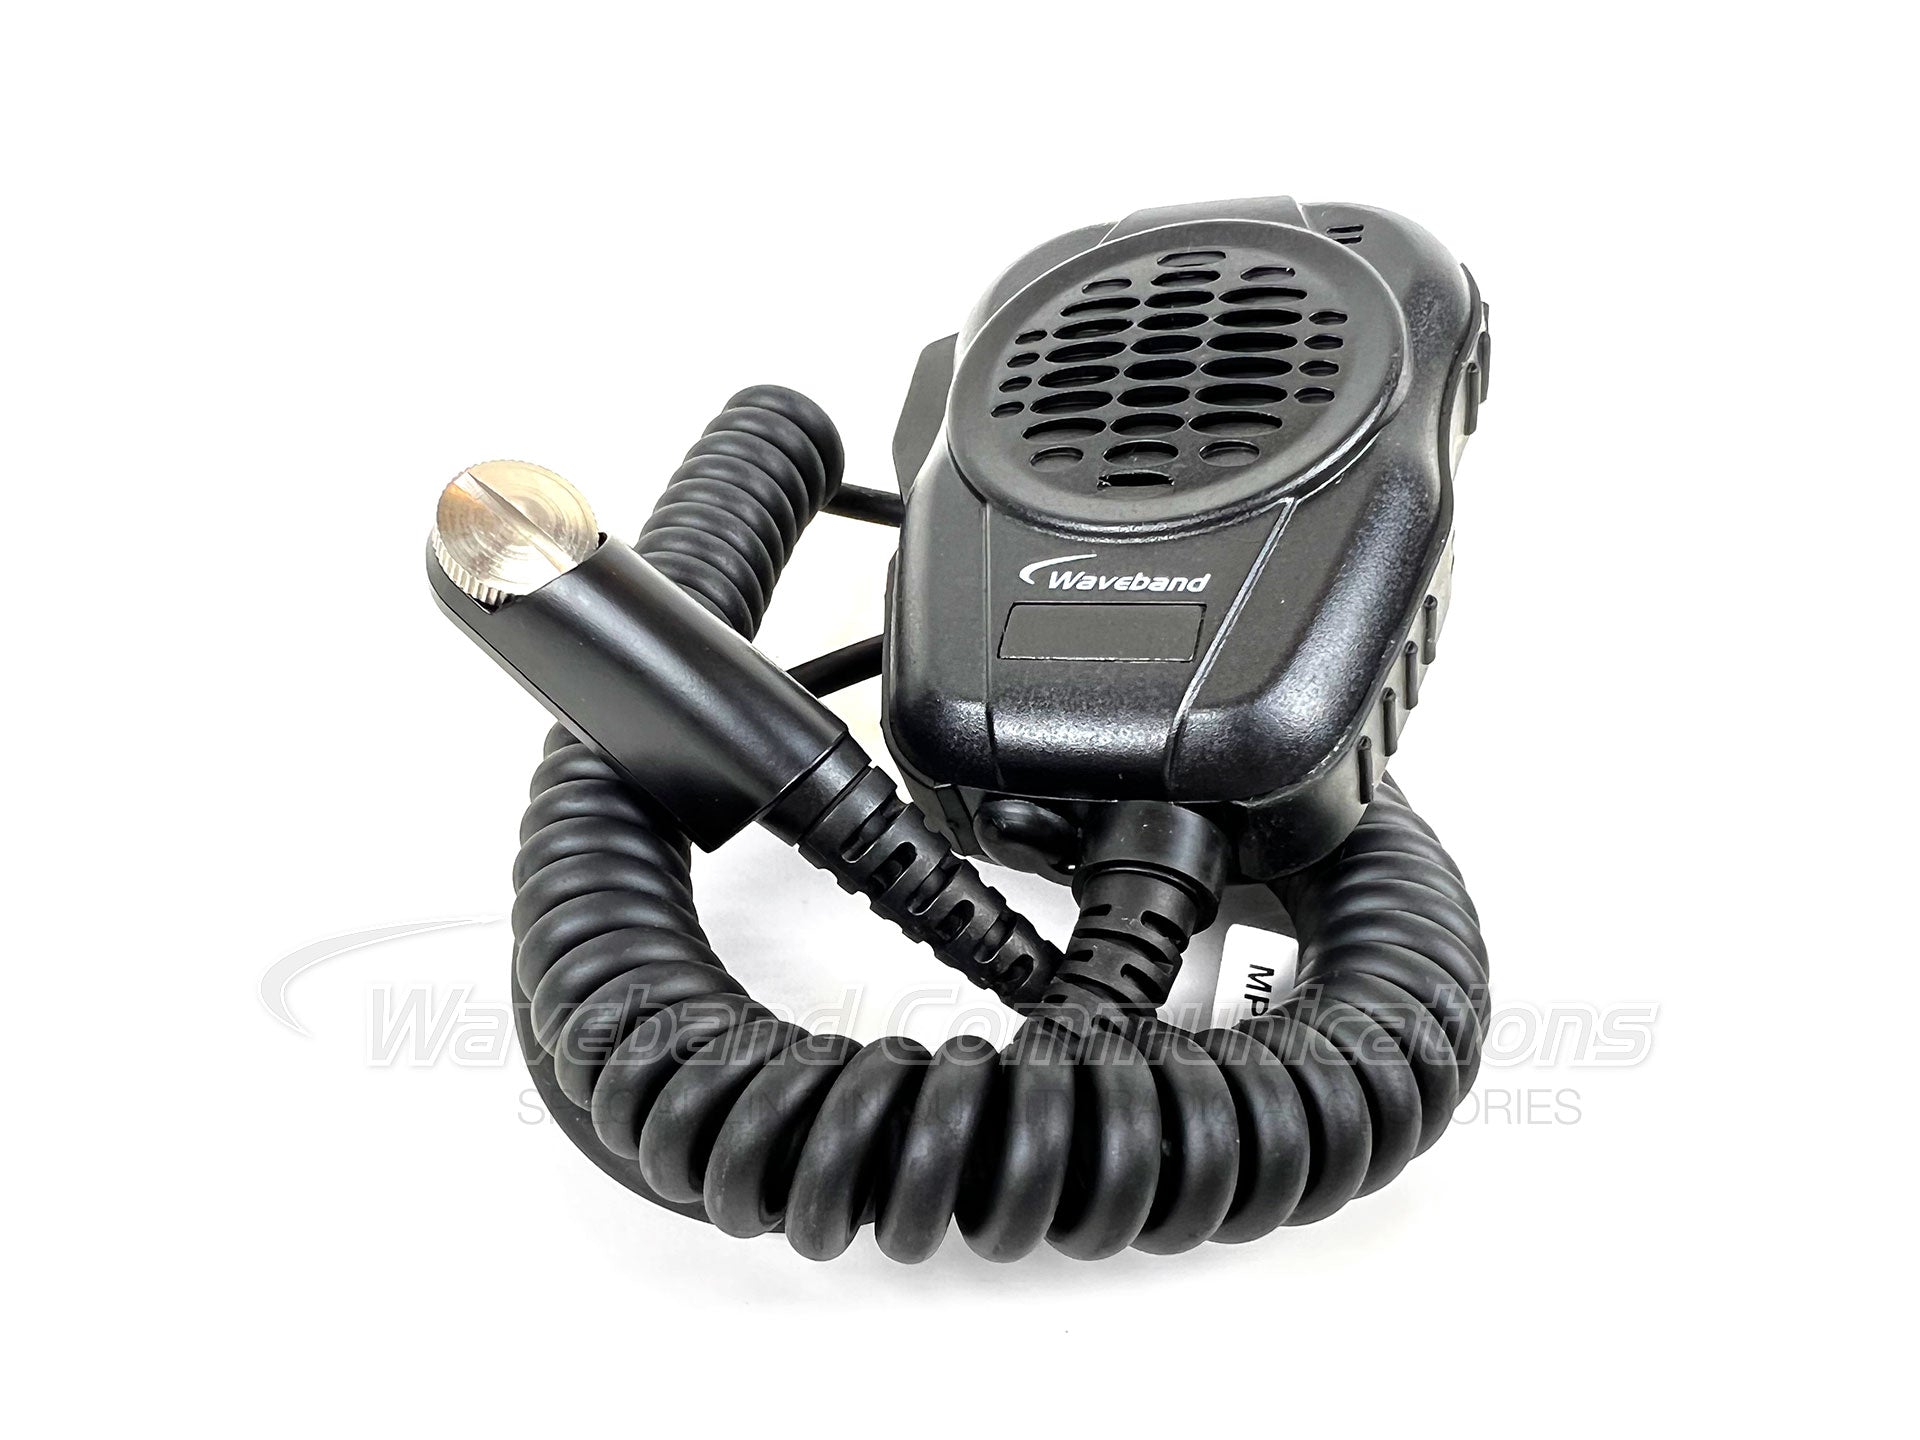 Waveband WX-8004-E5 Series Rugged Heavy Duty Public Safety Microphone for Harris Ma/com XG-100 P WB;WX-8004-E5